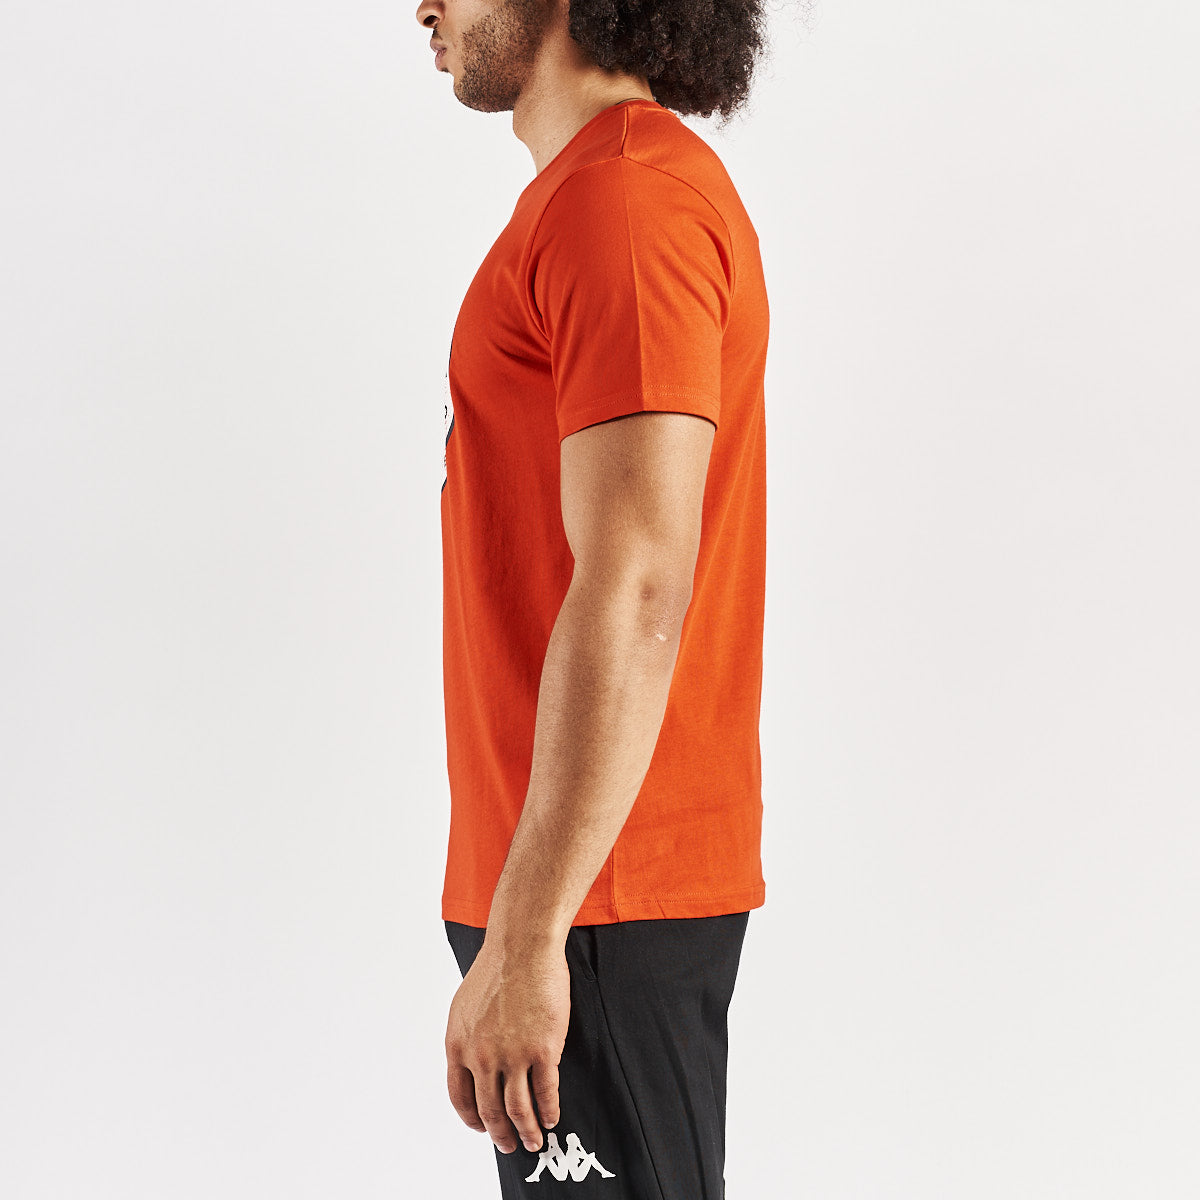 T-shirt Tiscout Orange Homme - Image 2